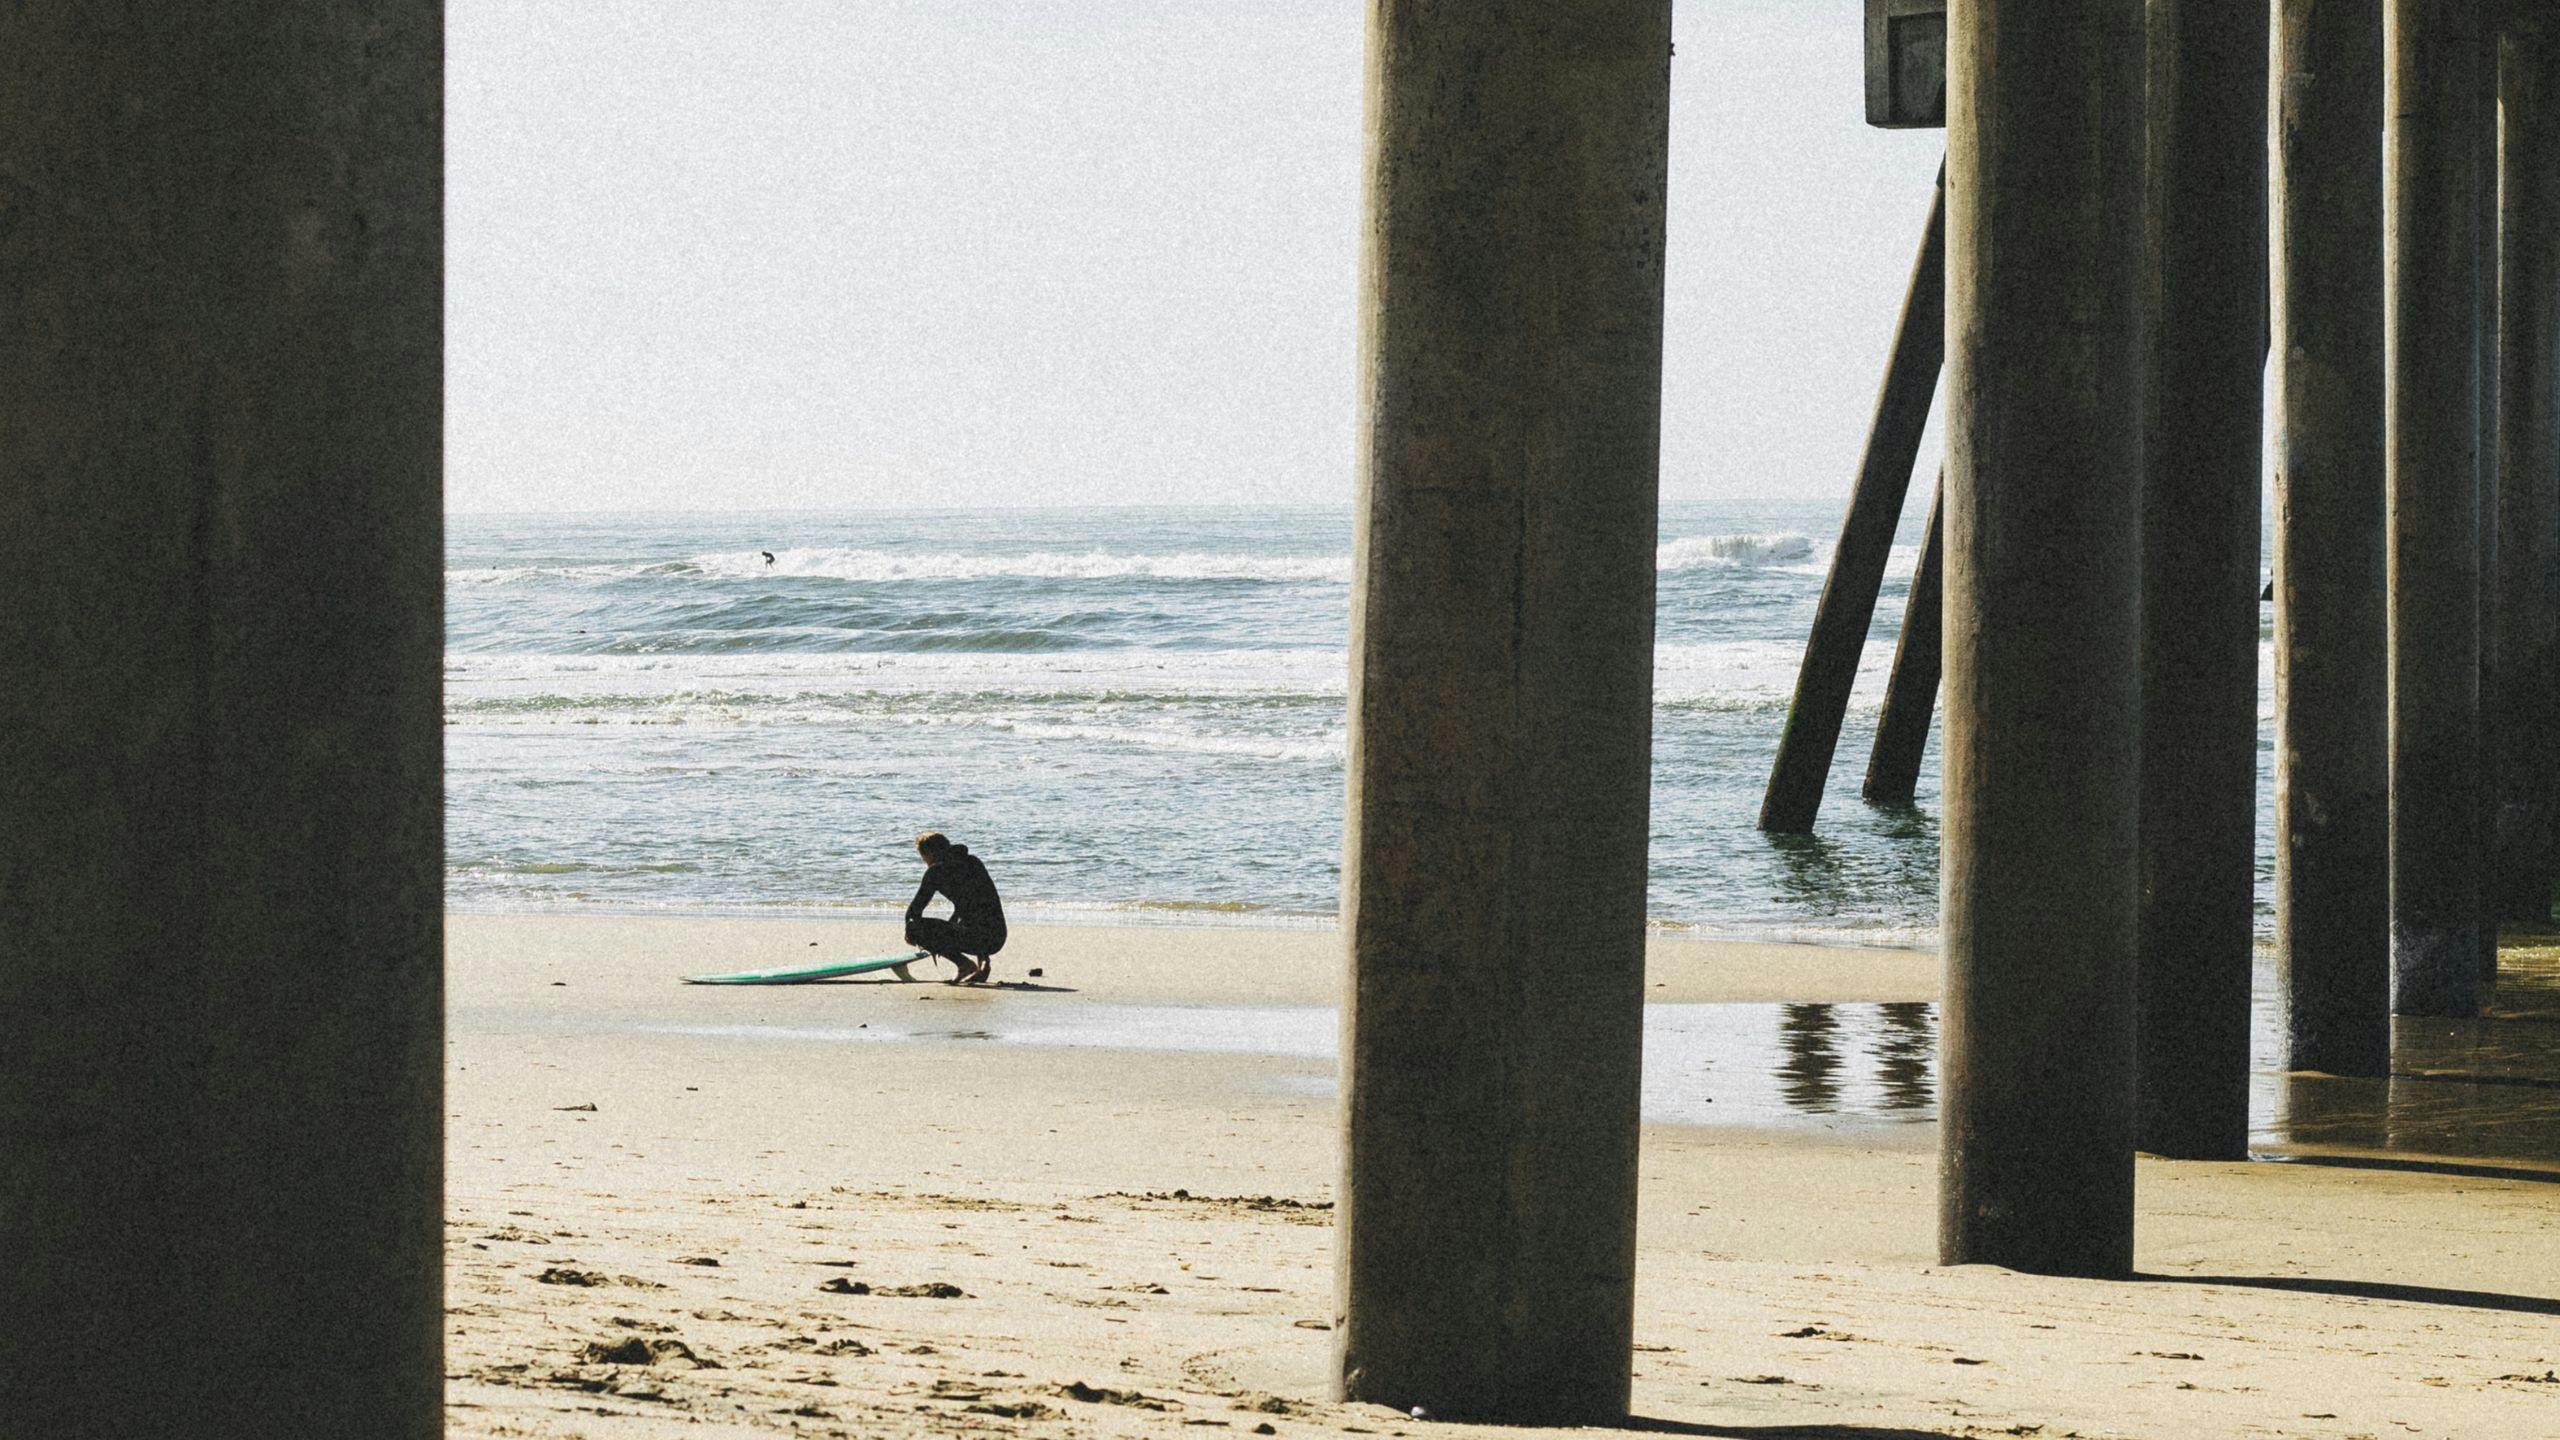 Surfer being framed between the pier columns.